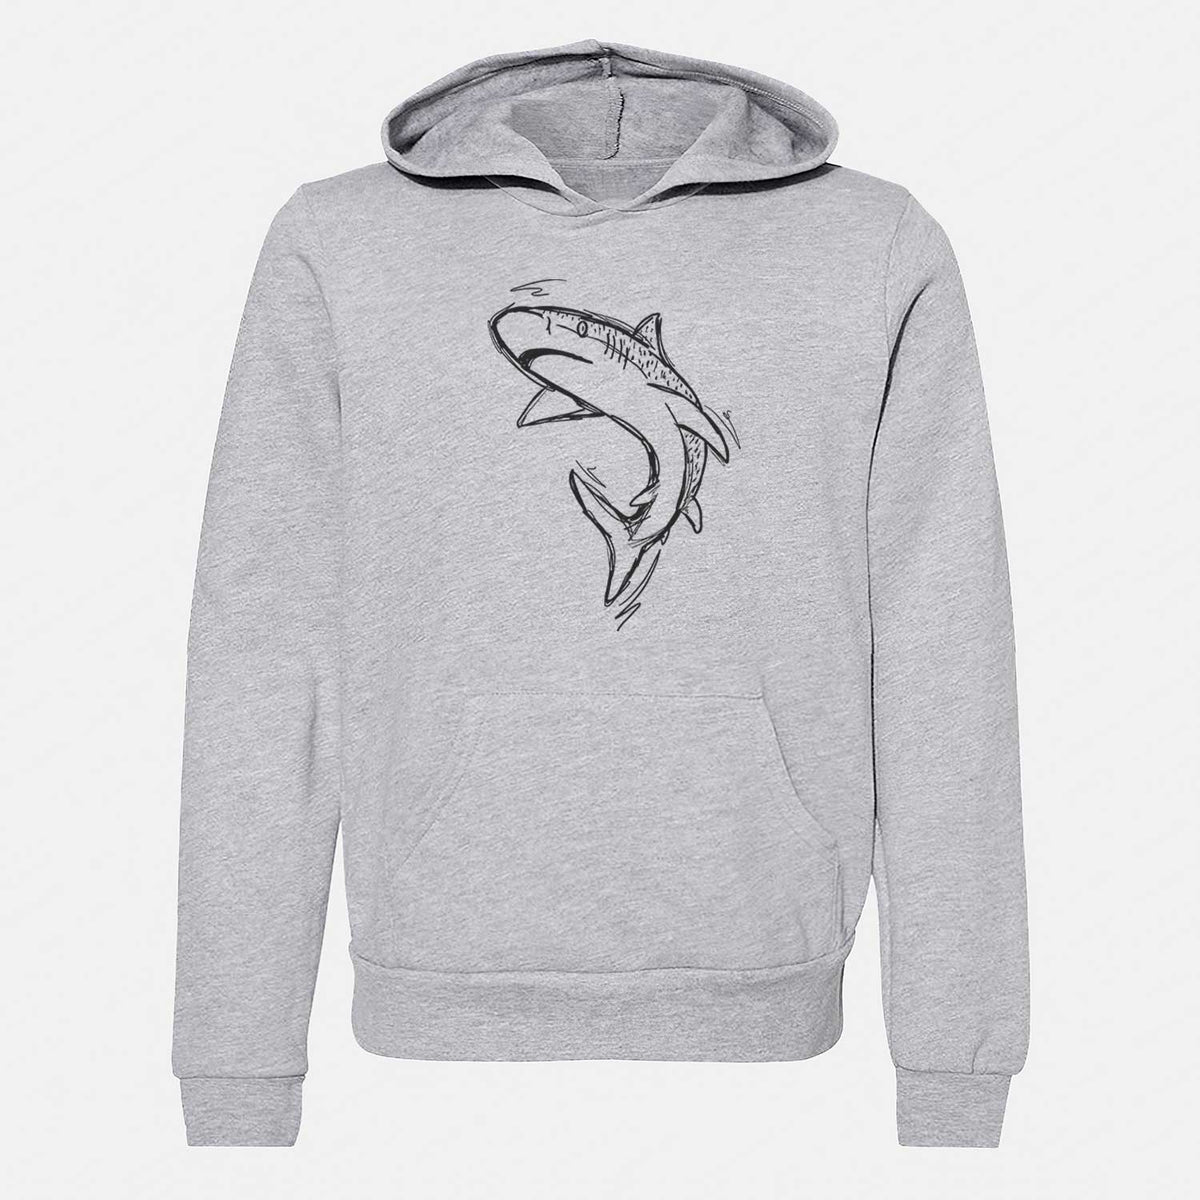 Tiger Shark - Youth Hoodie Sweatshirt